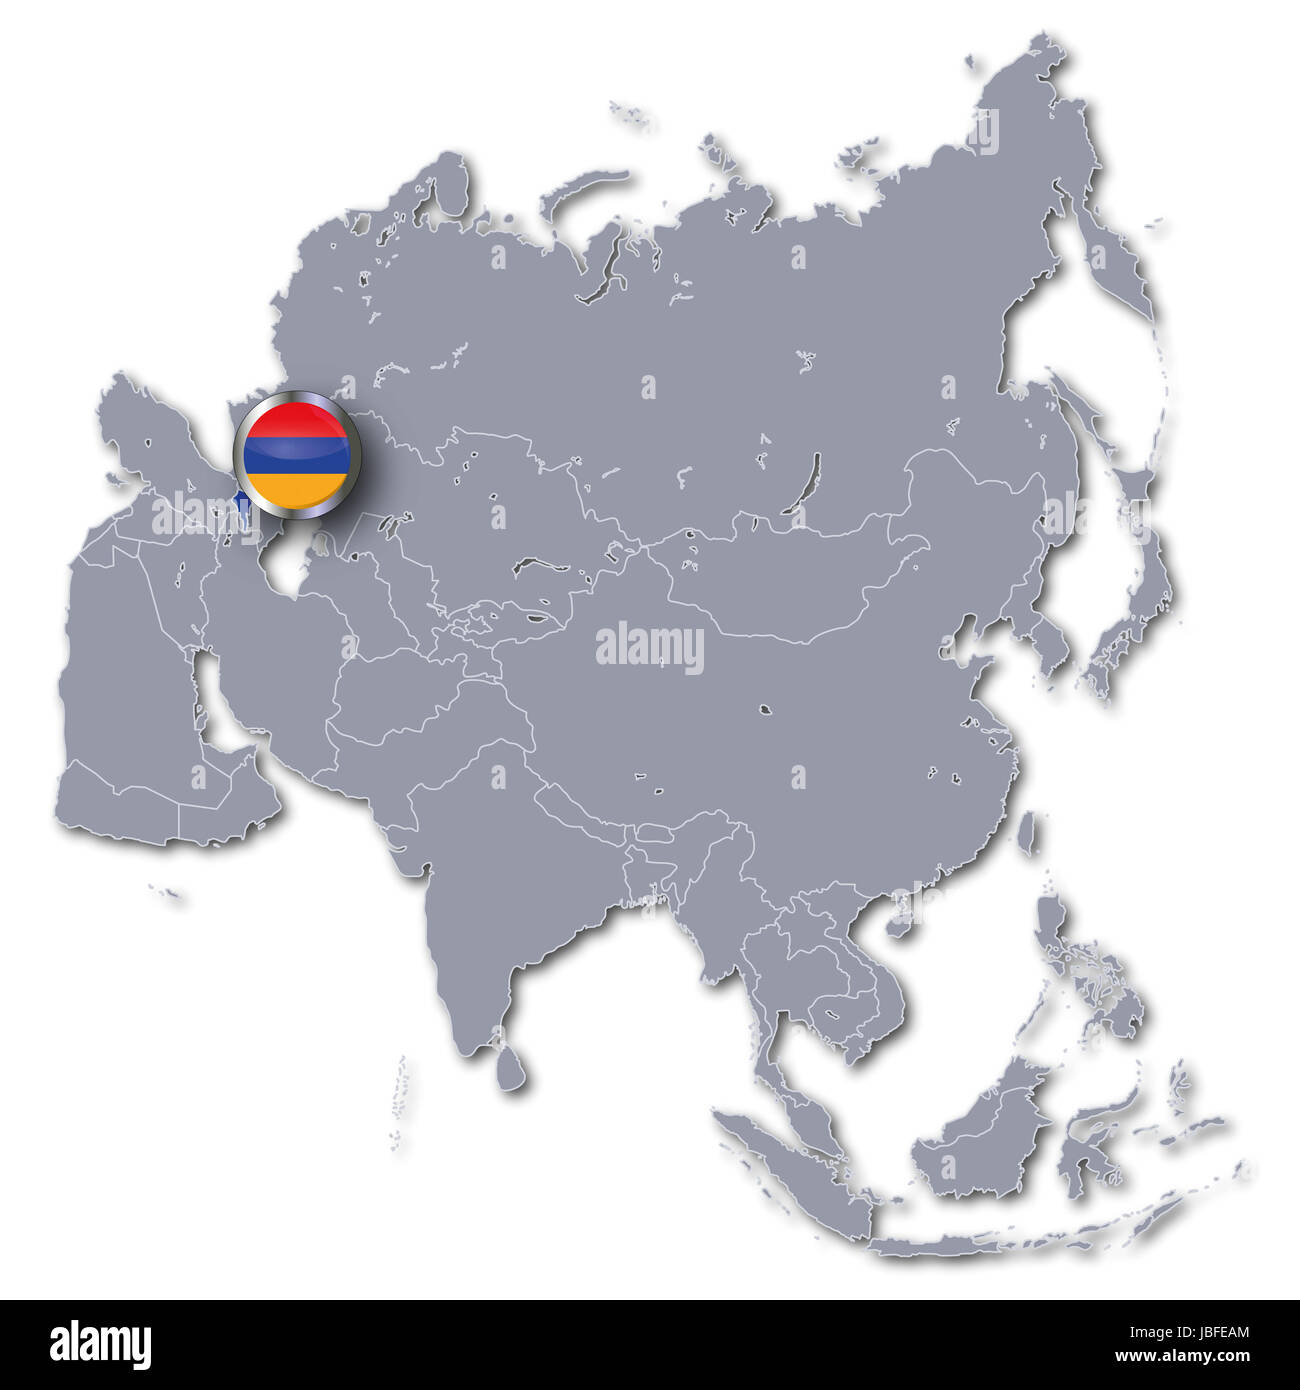 asia map with armenia Stock Photo